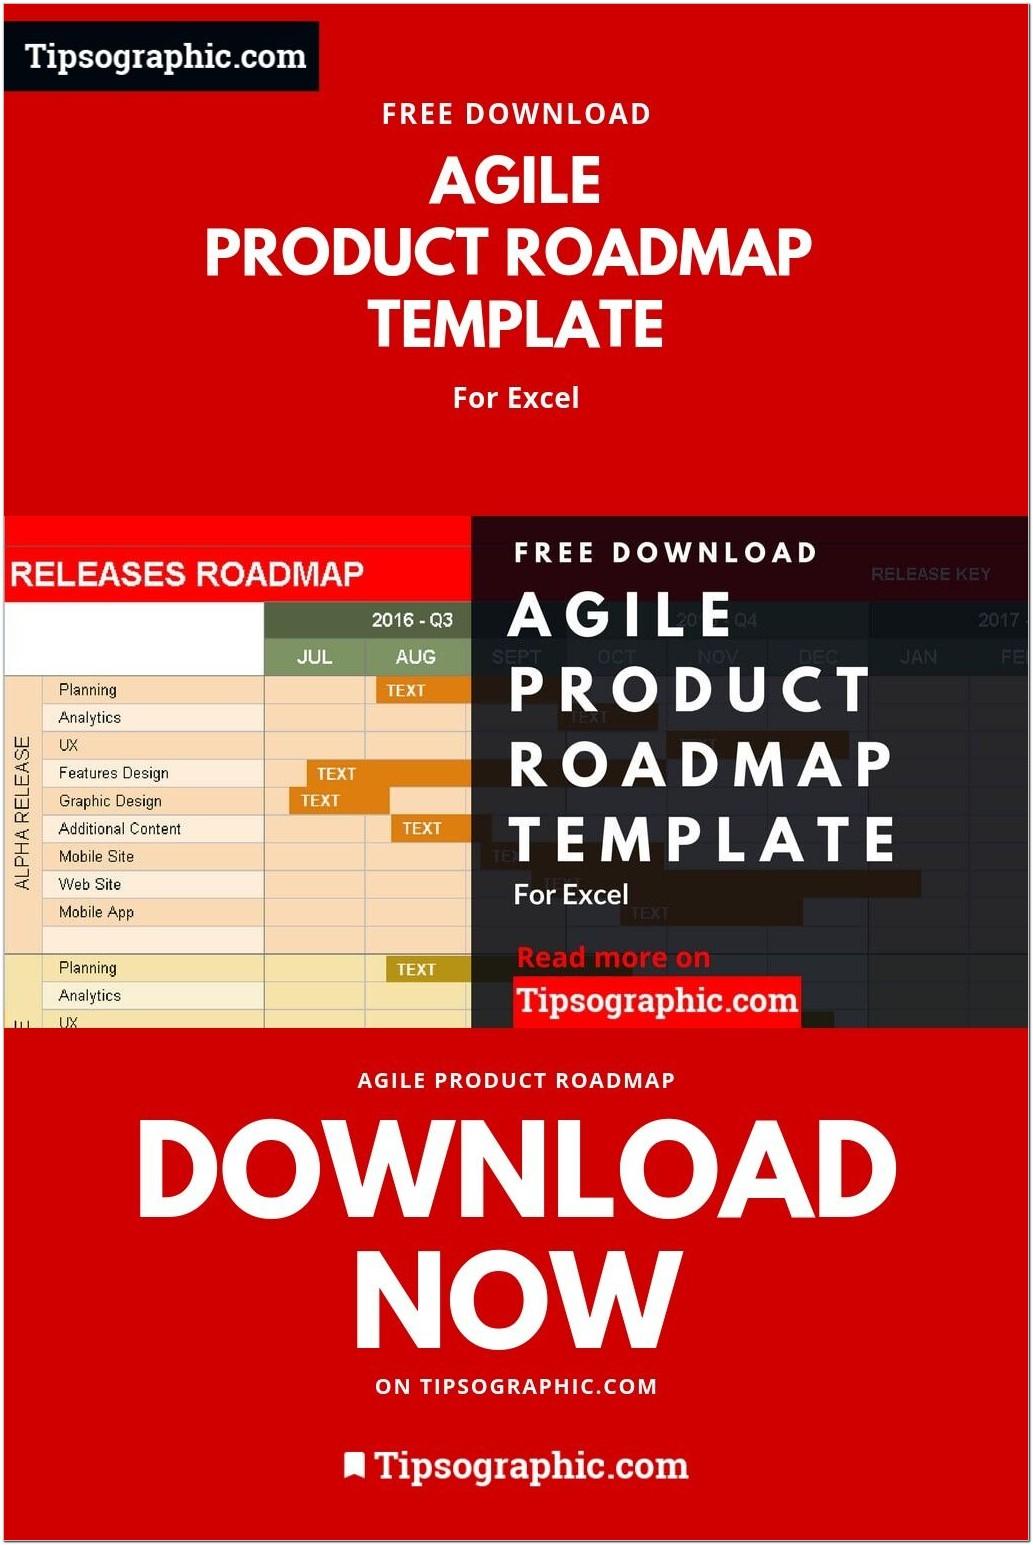 Agile Product Roadmap Template Free